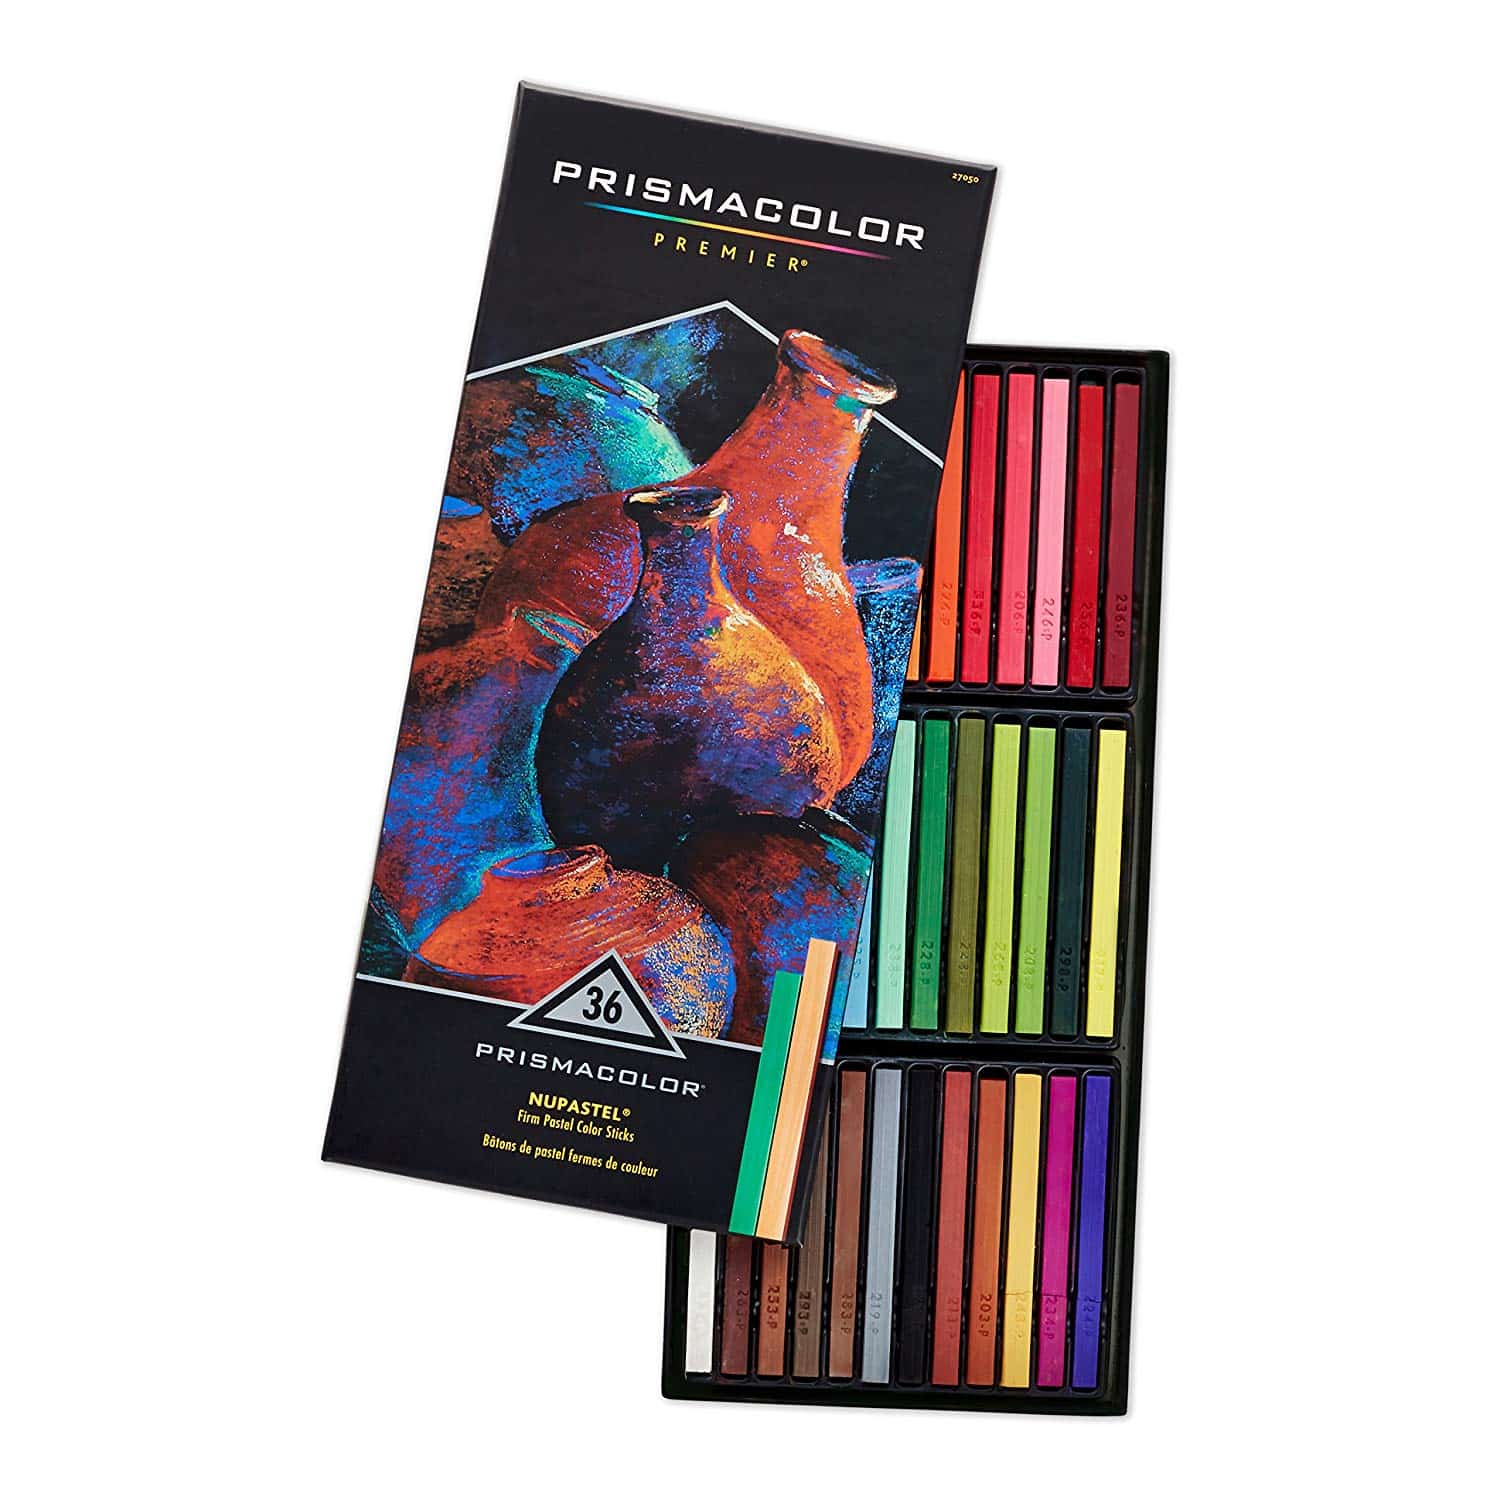 DEAL ALERT: Prismacolor Pastel Color Sticks, 36-Count – 53% off